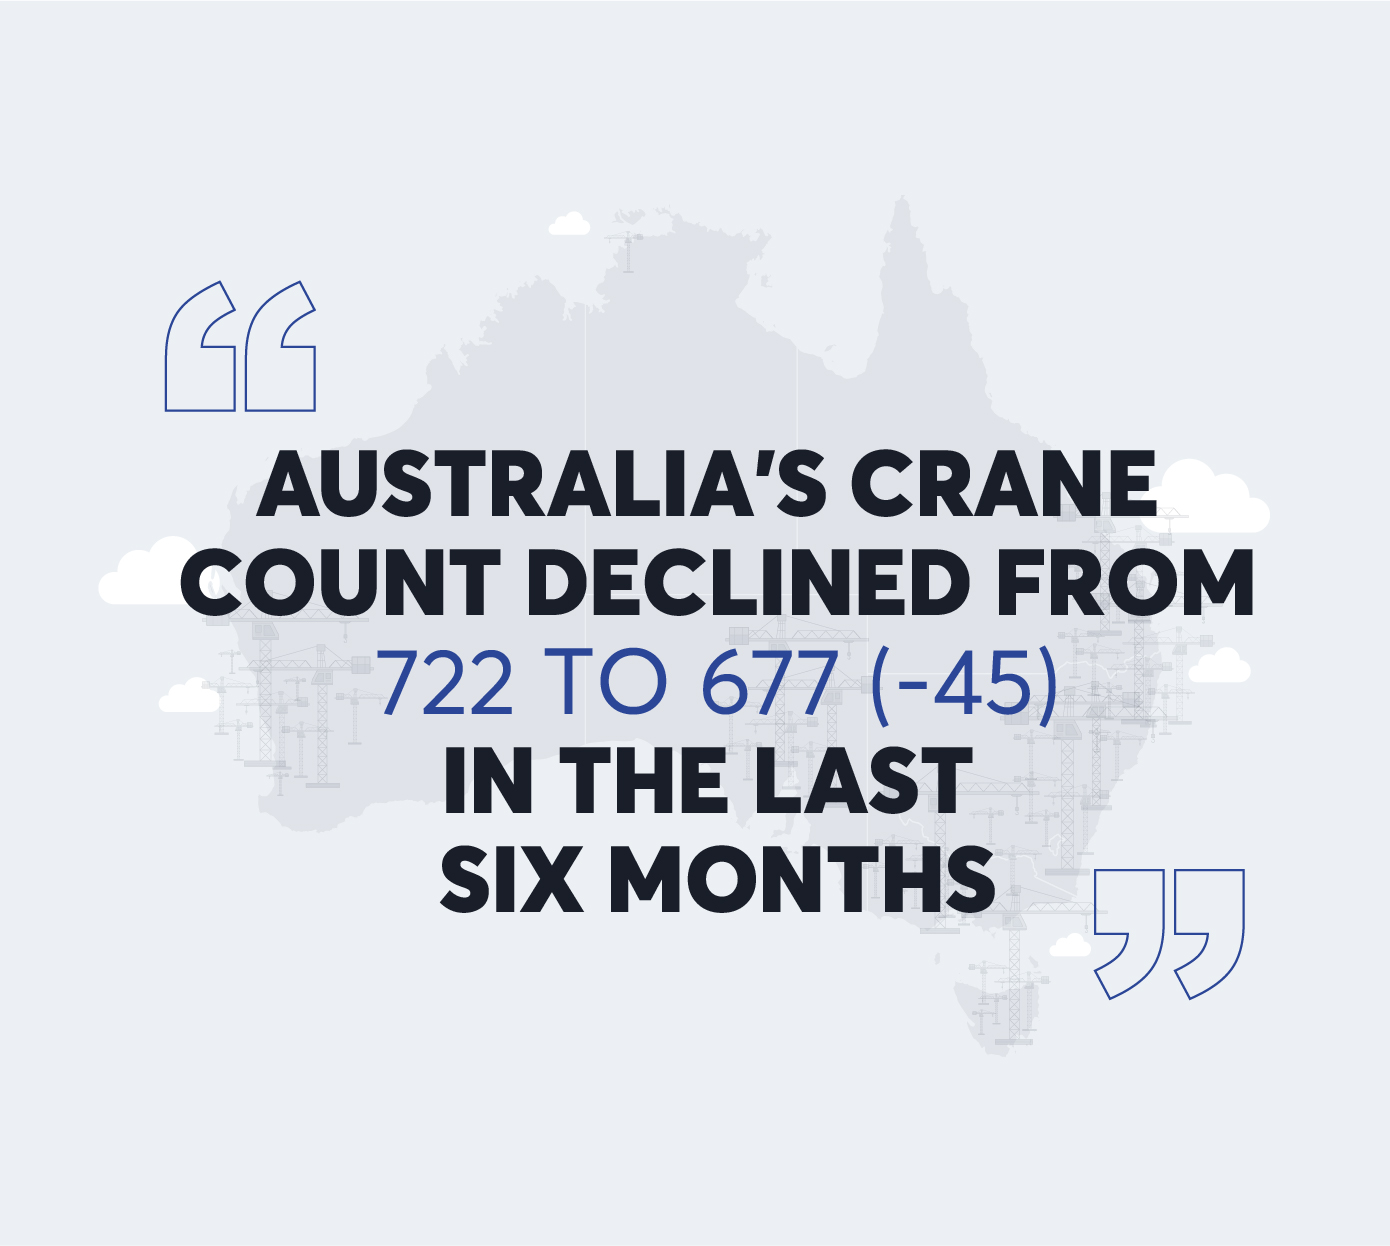 Crane count declined